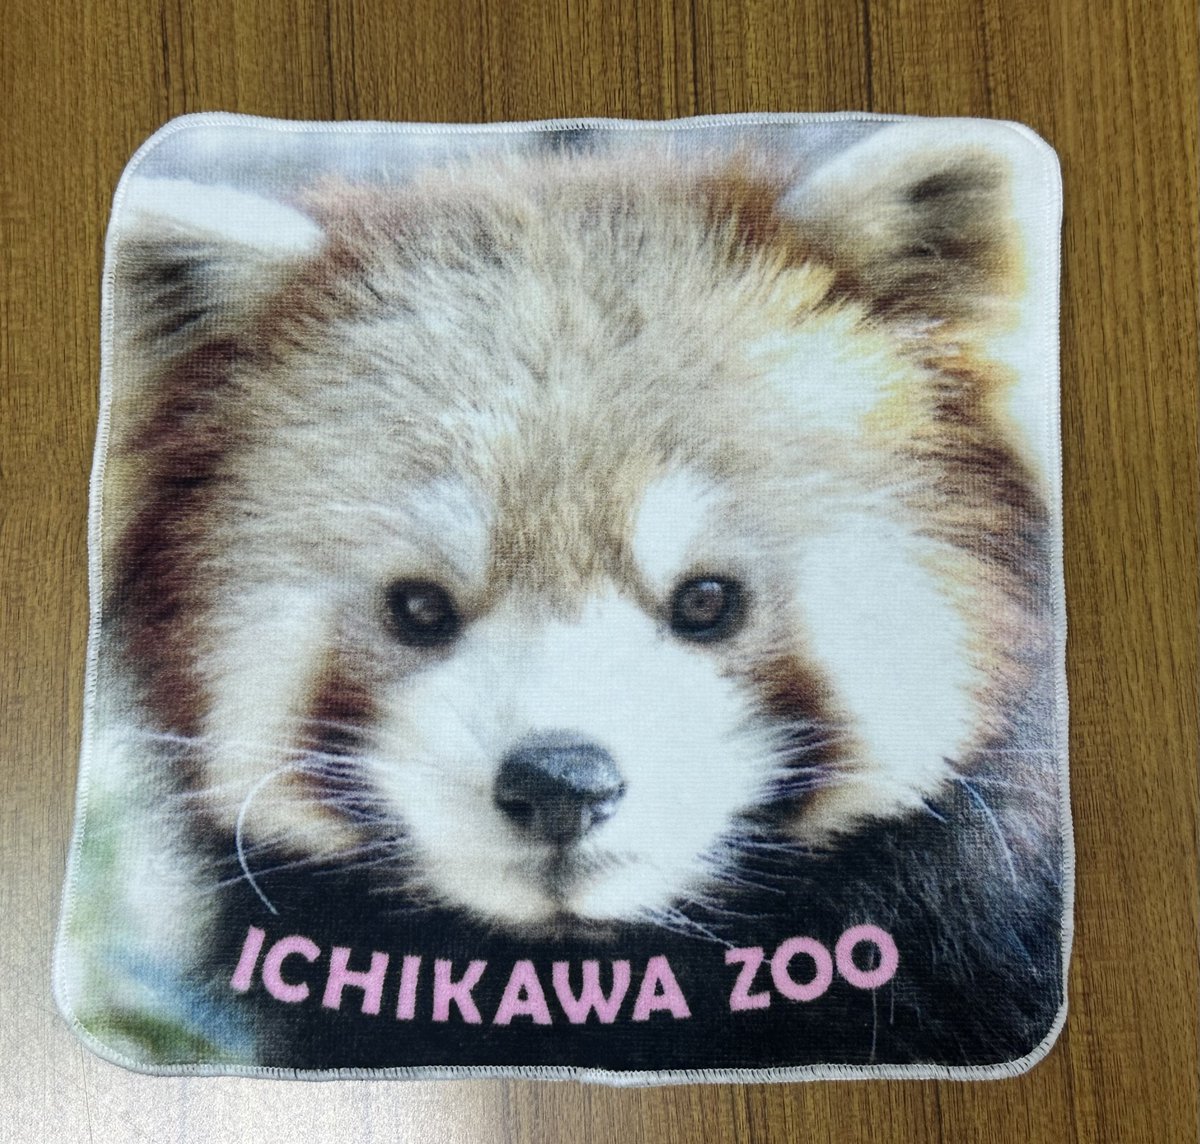 ichikawa_zoo tweet picture